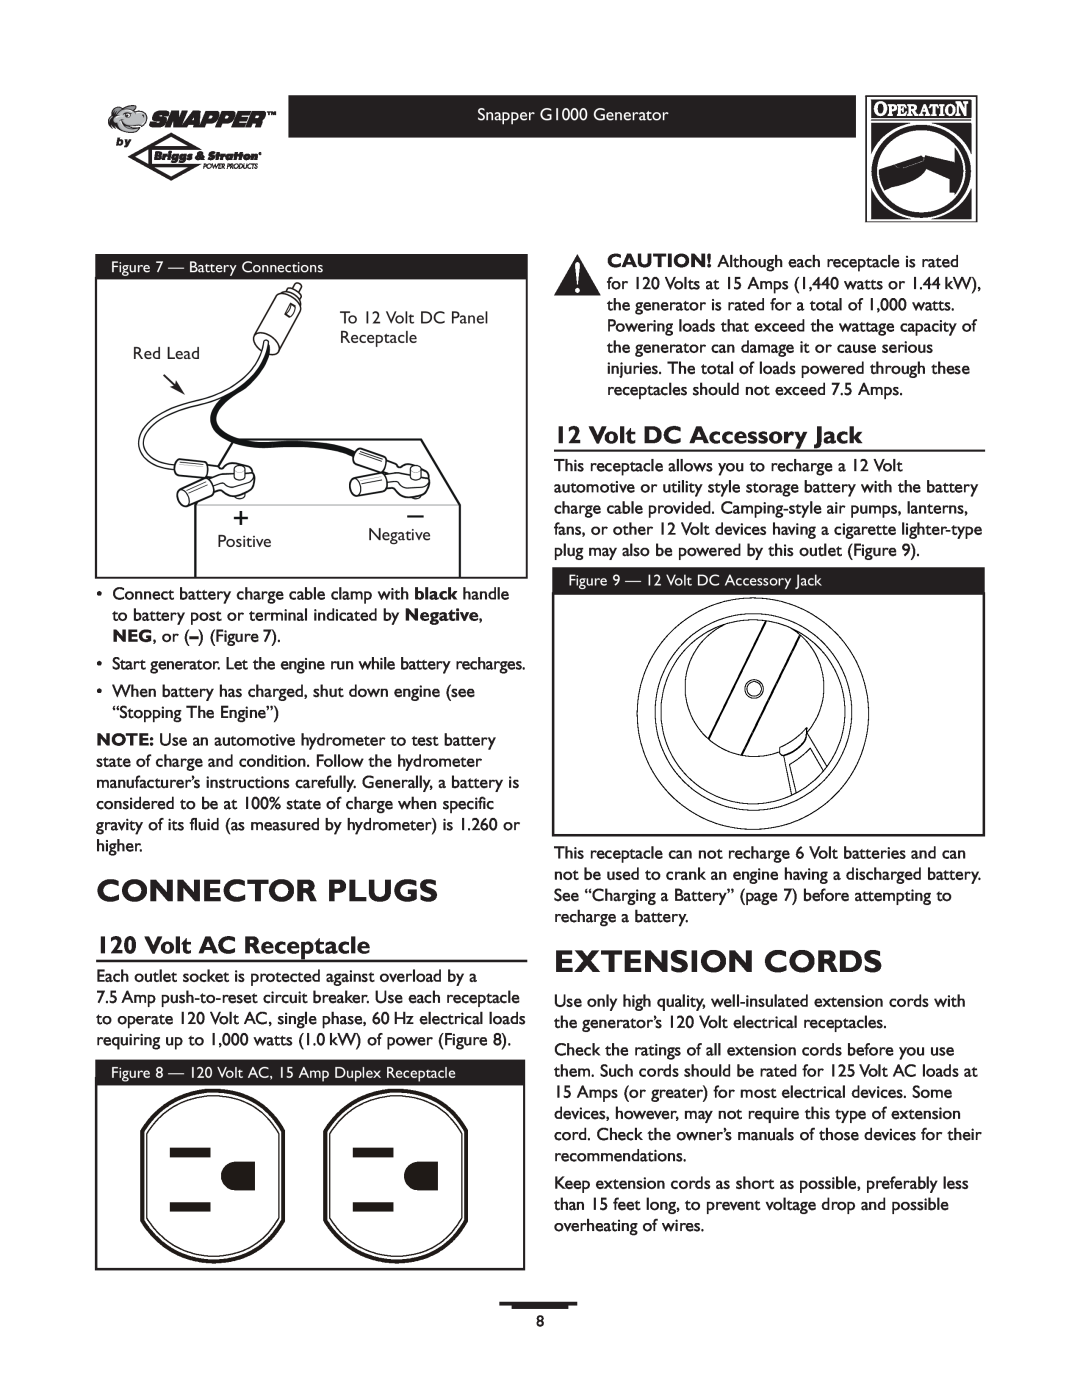 Snapper 1666-0 owner manual Connector Plugs, Extension Cords, Volt DC Accessory Jack, Volt AC Receptacle 